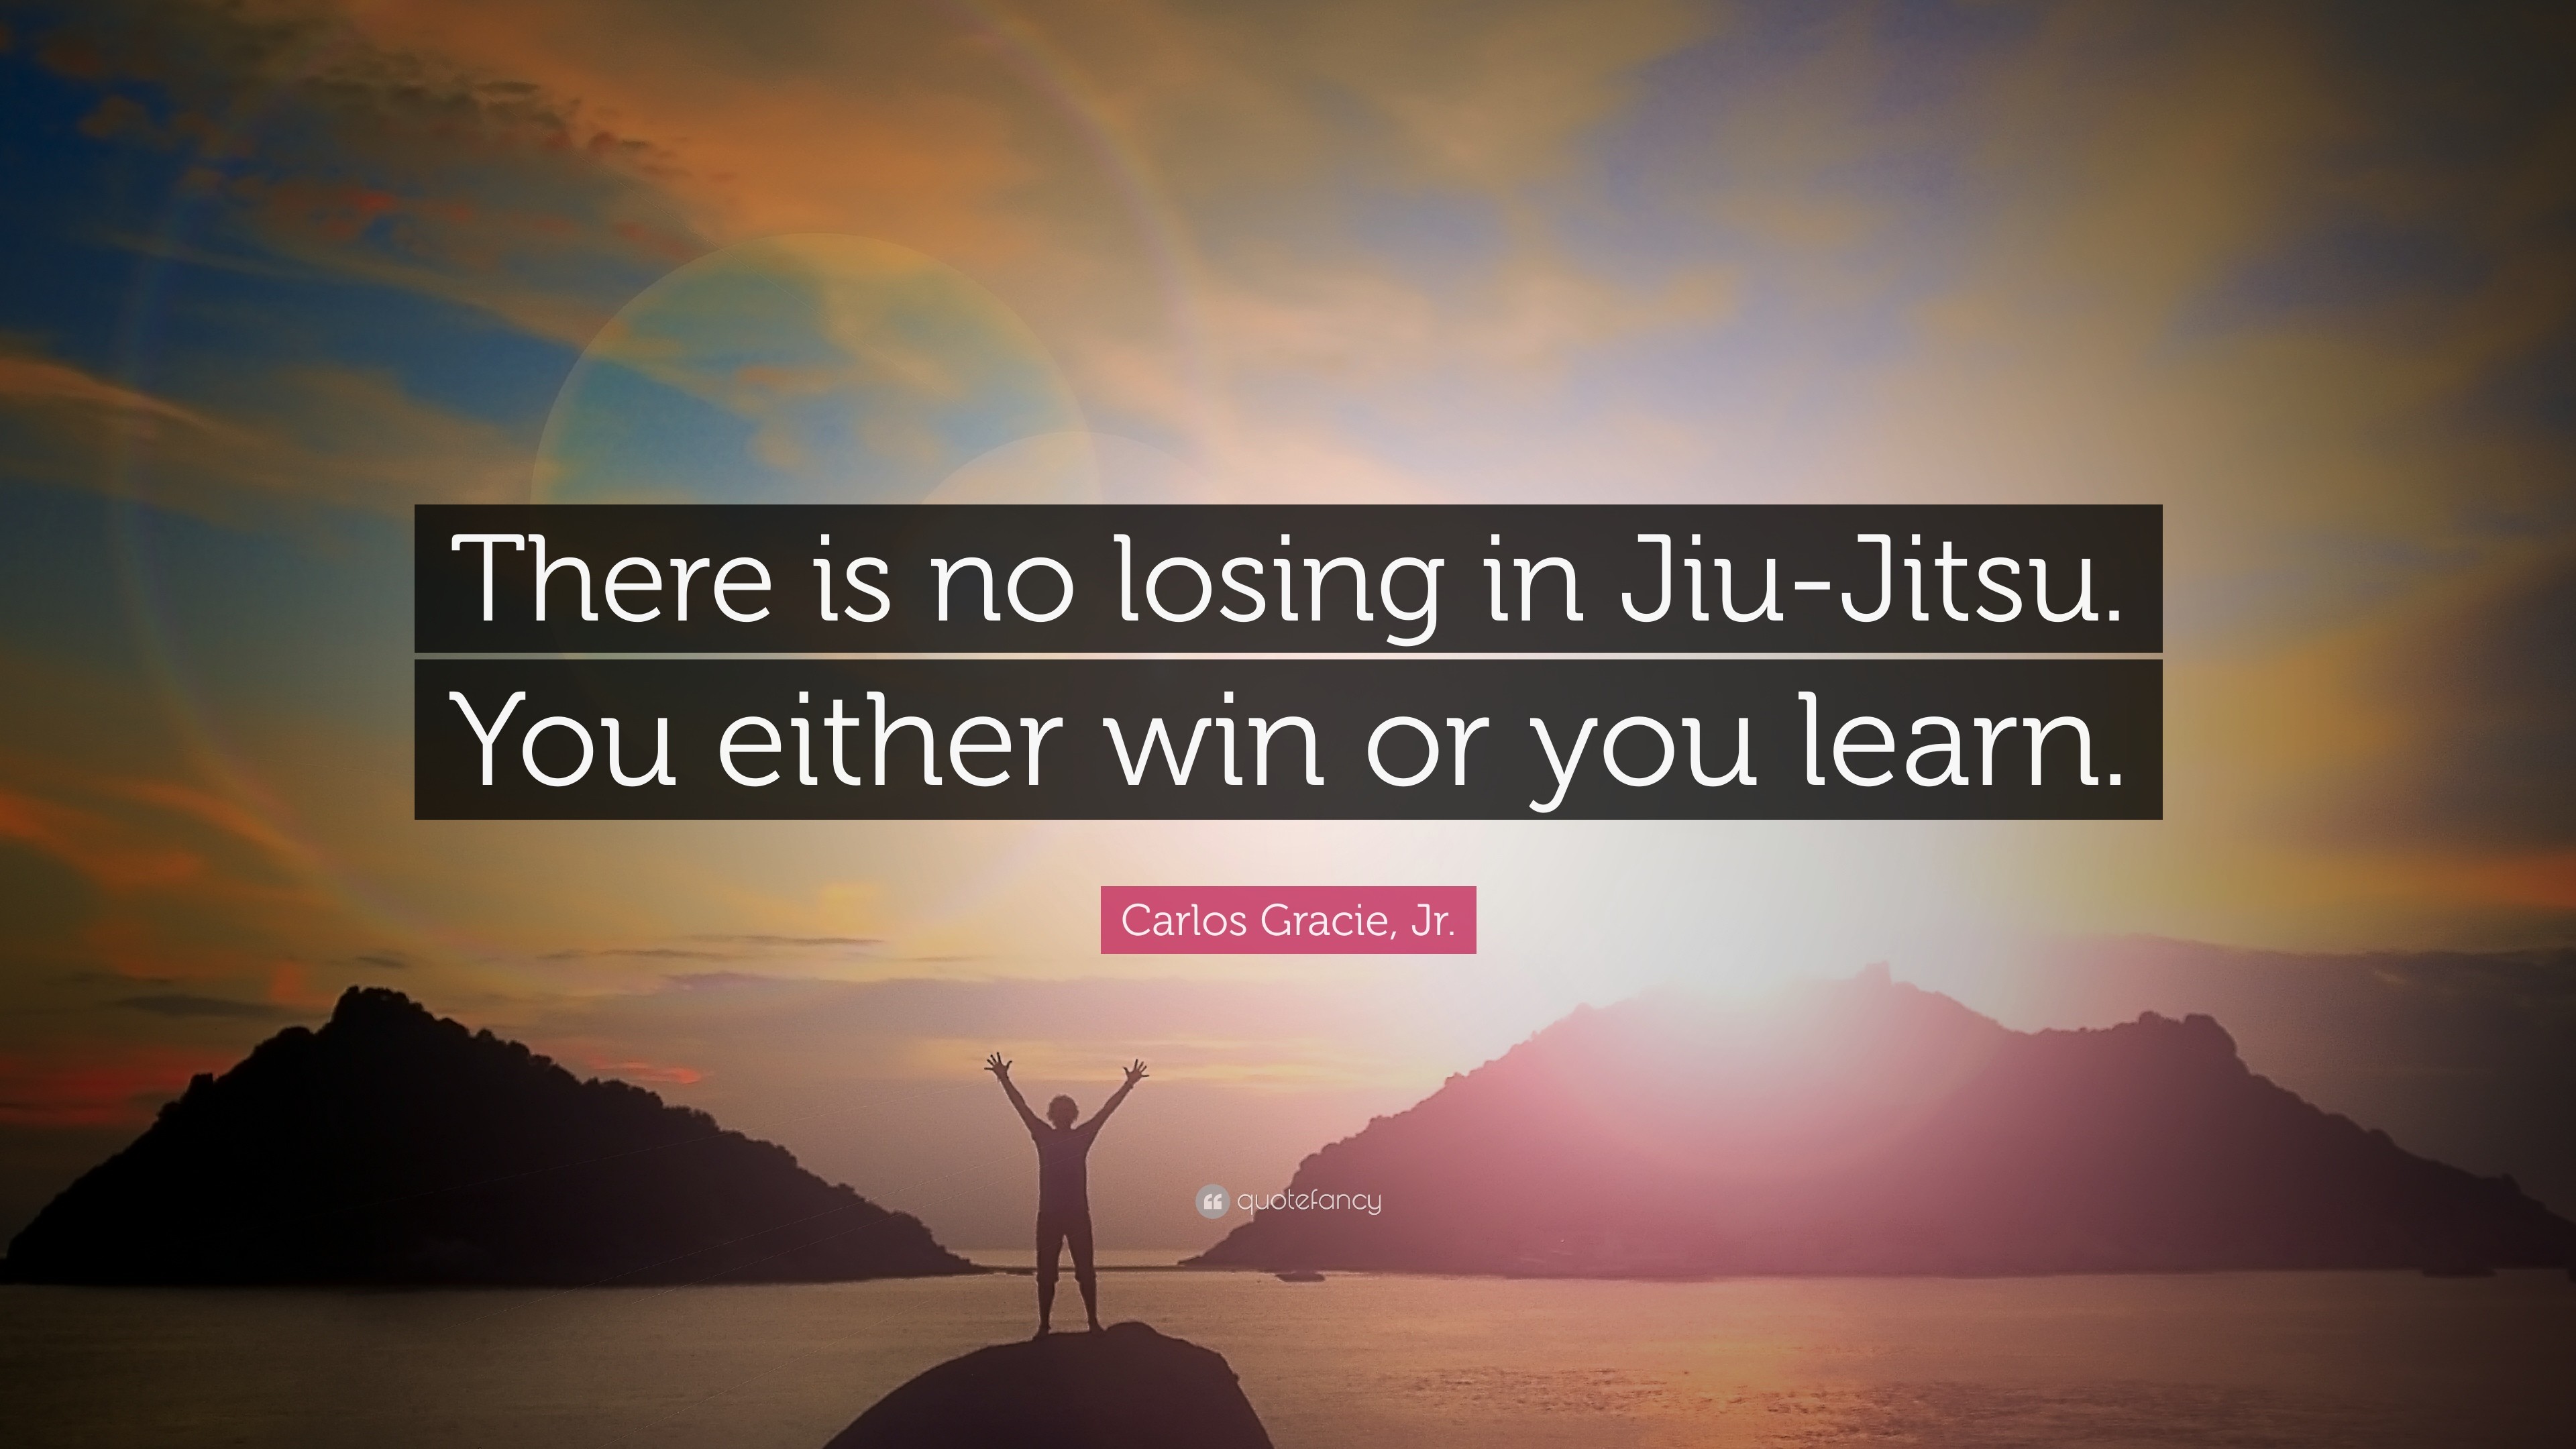 3840x2160 Carlos Gracie, Jr. Quote: “There is no losing in Jiu-Jitsu